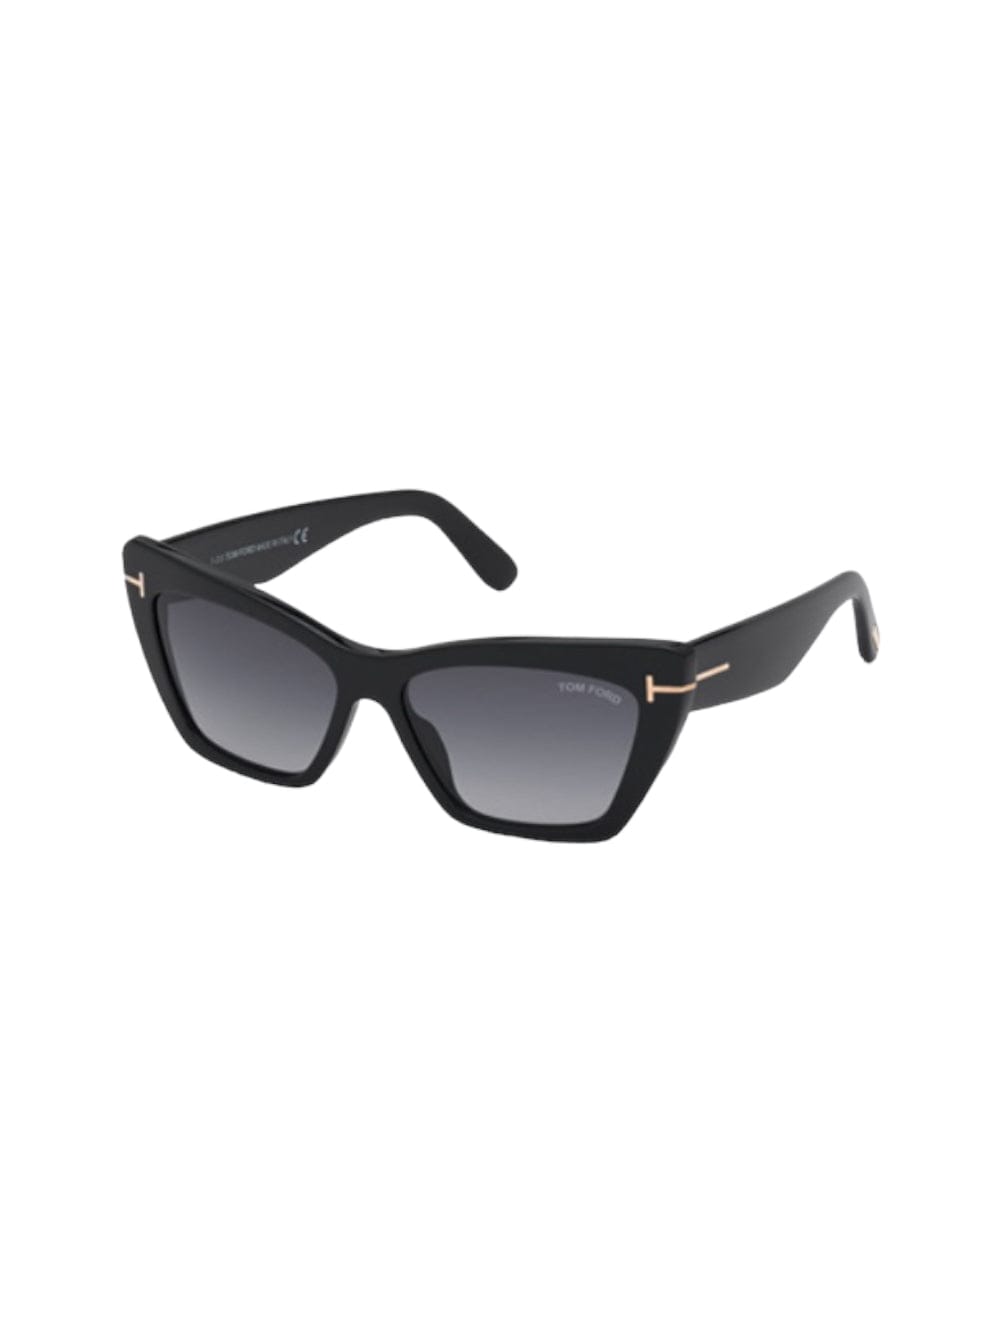 Tom Ford Wyatt - Tf871 - Black Sunglasses